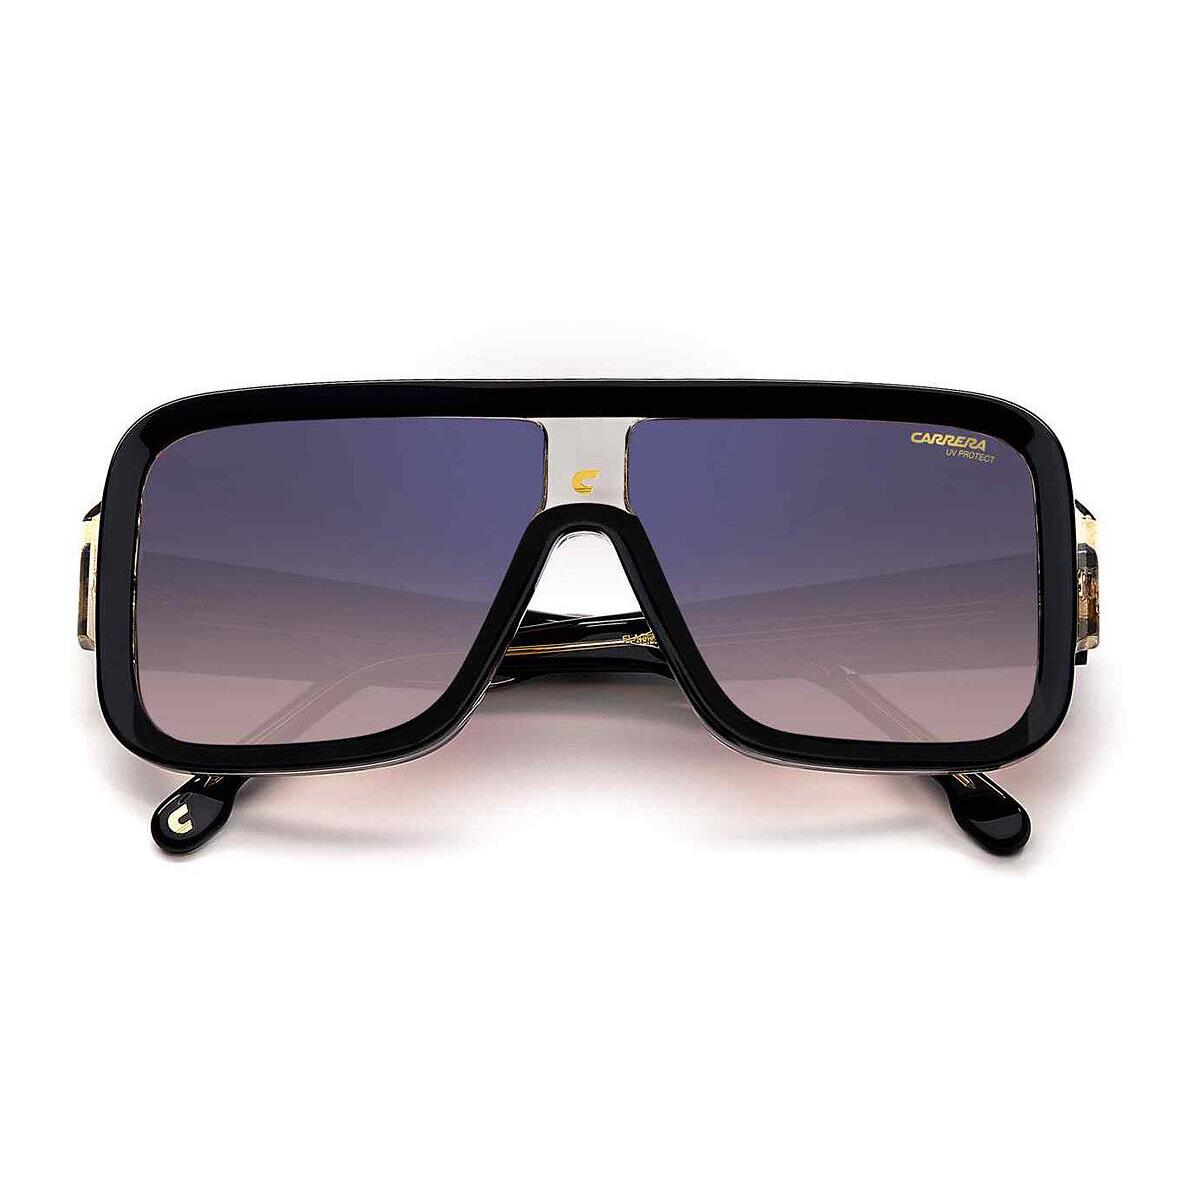 Carrera Flaglab 14 Sunglasses Black Beige Brown Shaded Blue Mirrored 62mm - Frame: Black Beige / Brown Shaded Blue Mirrored, Lens: Brown Shaded Blue Mirrored